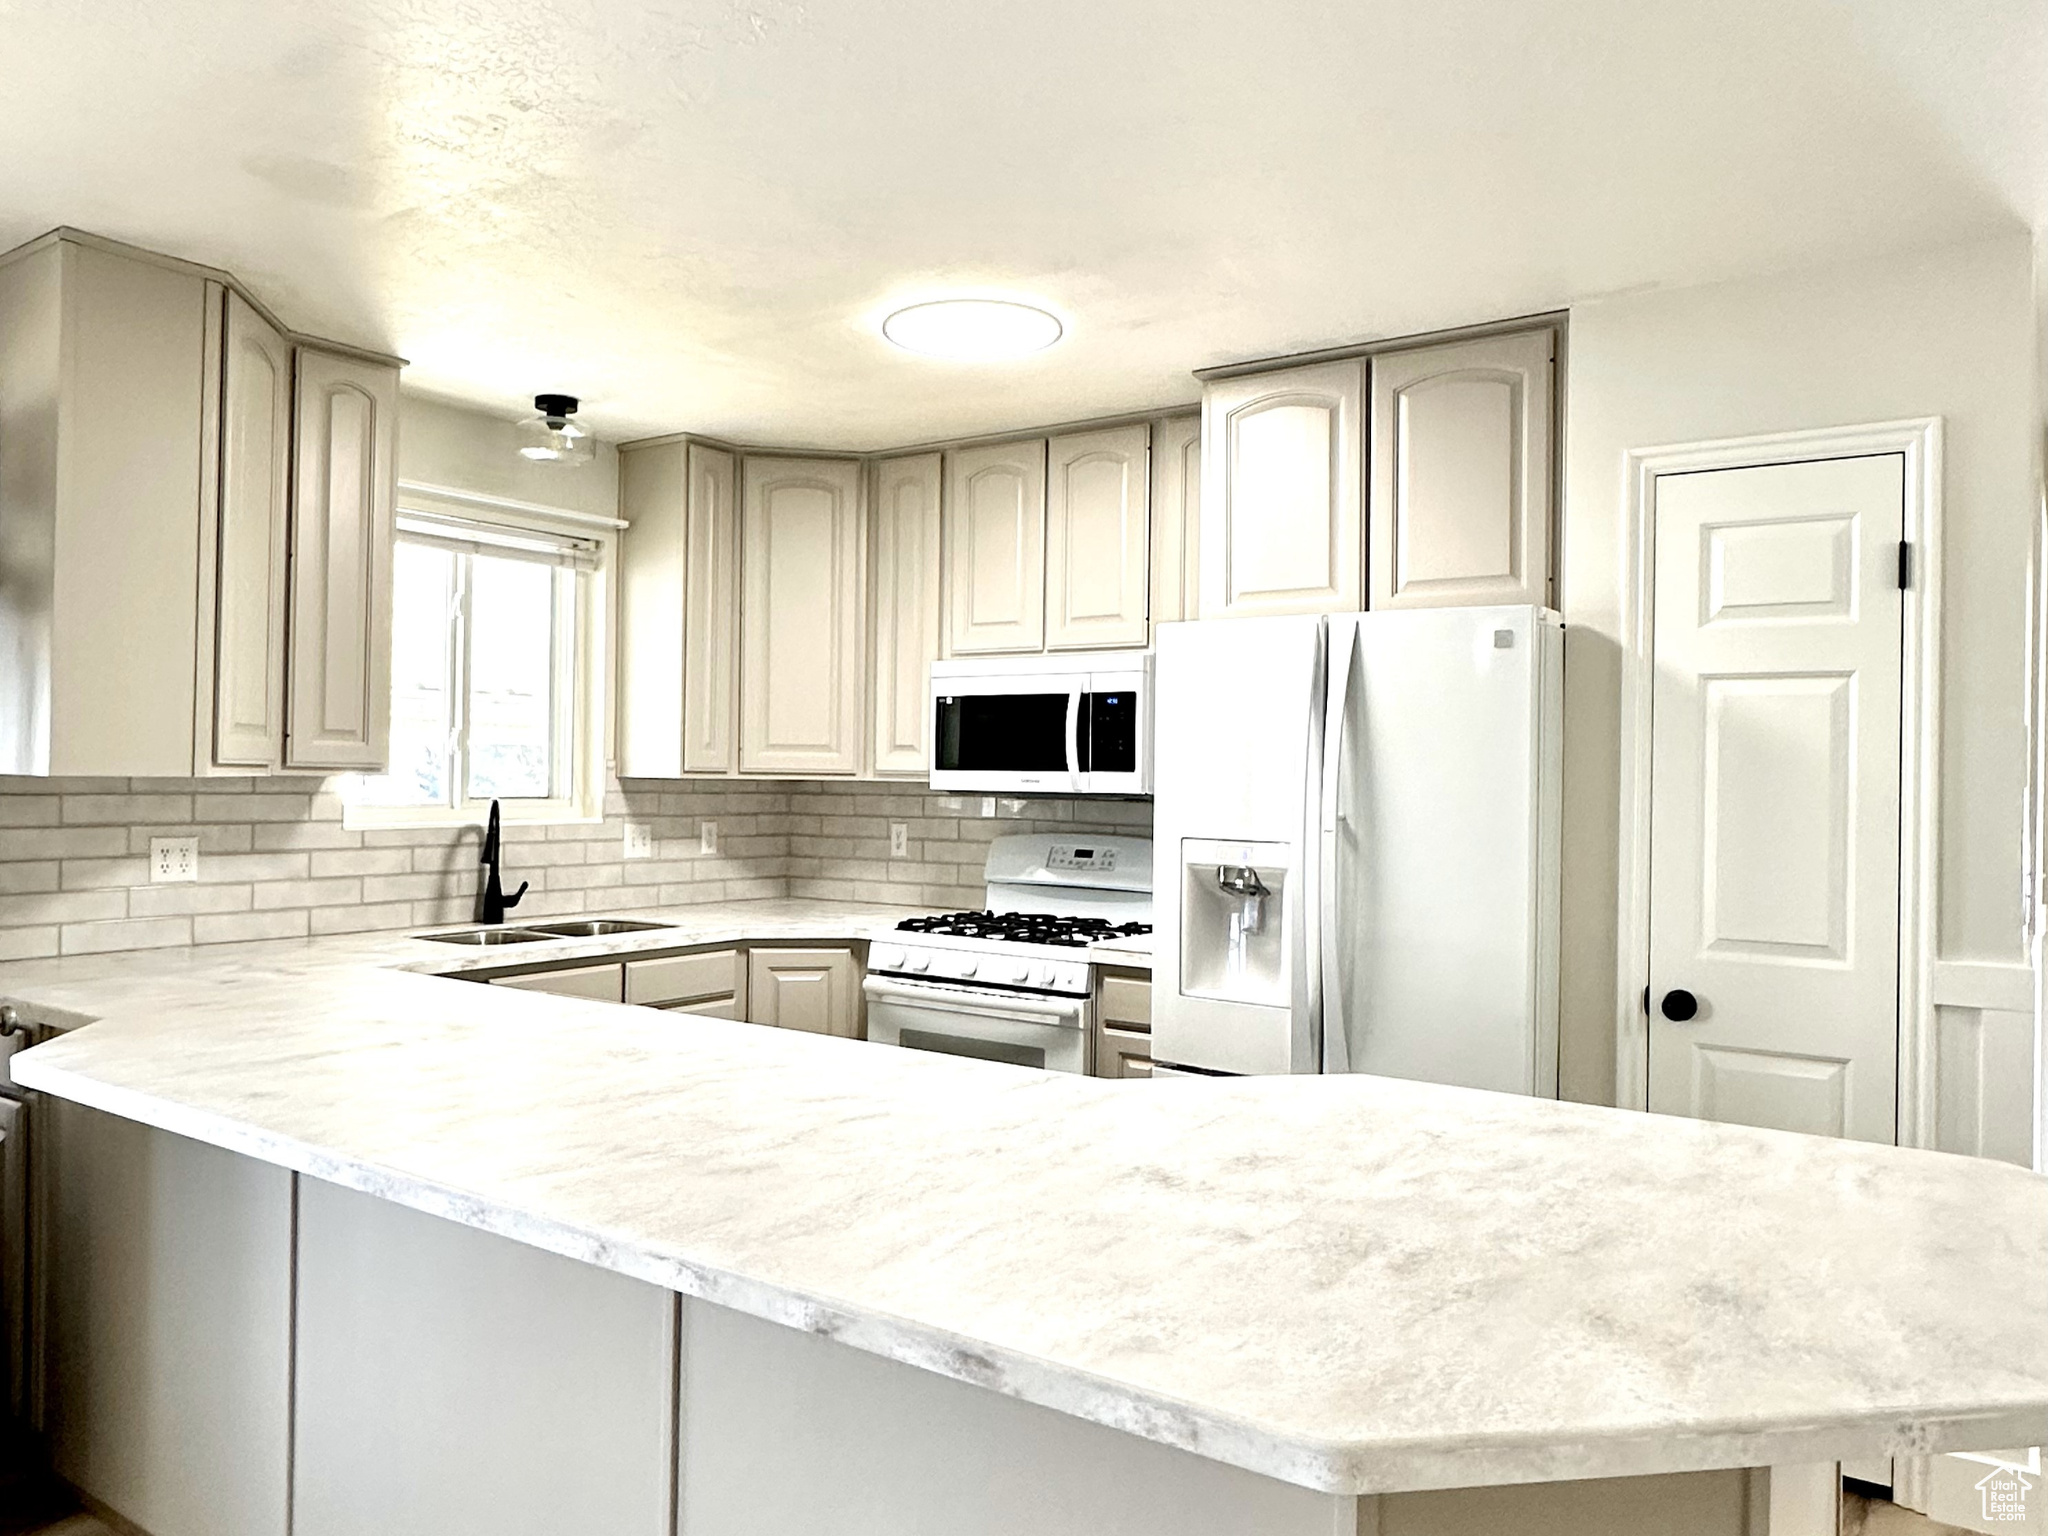 Kitchen featuring light hardwood / wood-style floors, light stone countertops, white appliances, kitchen peninsula, and sink